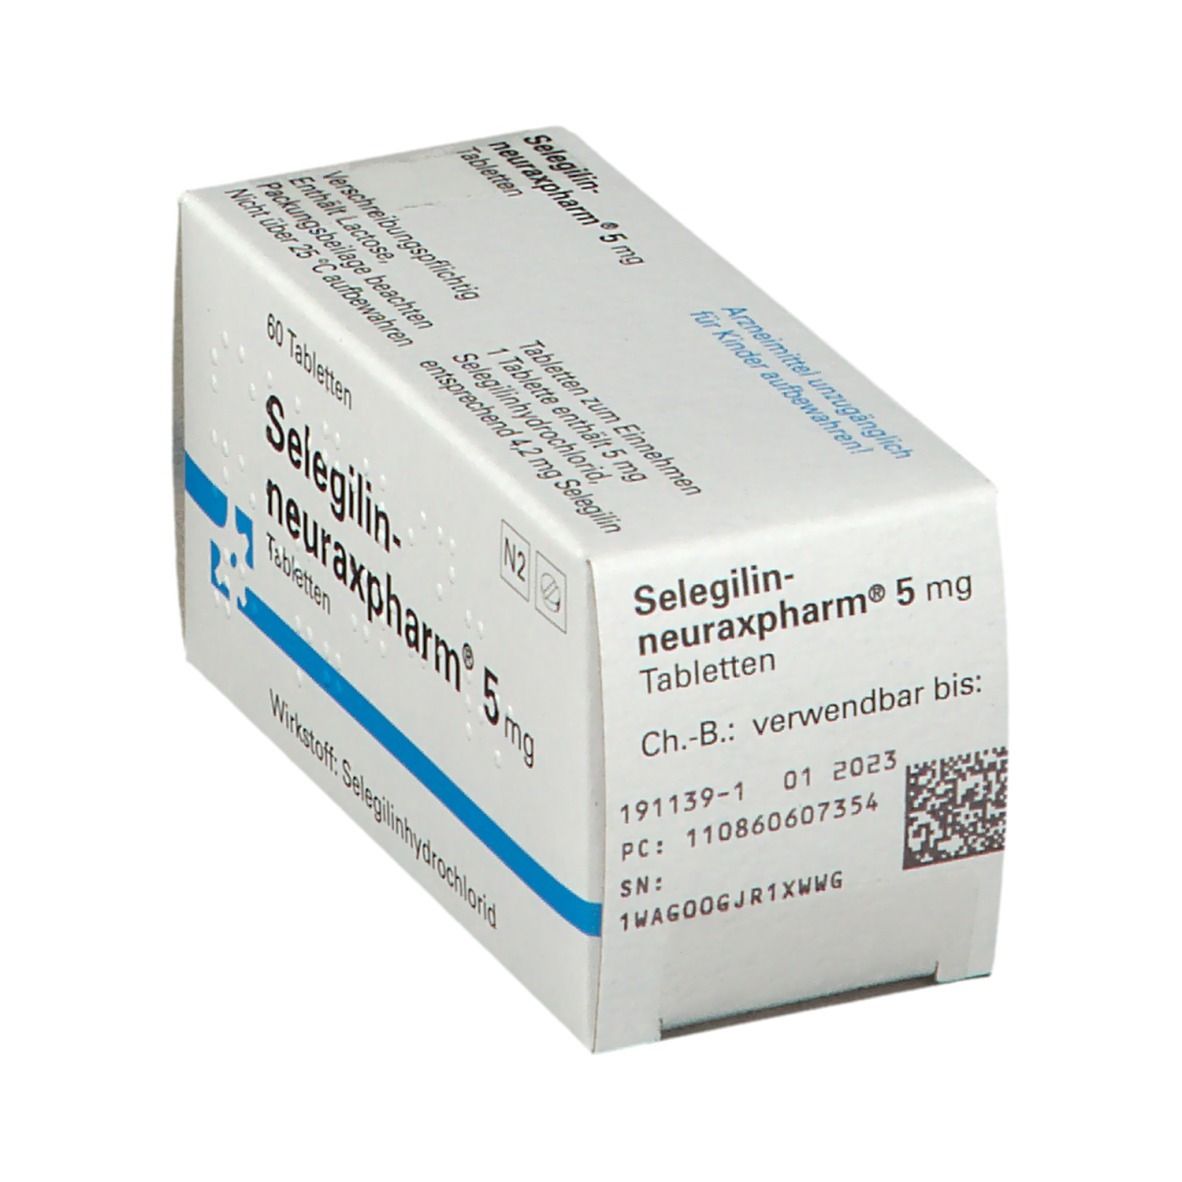 Selegilin-neuraxpharm® 5 mg